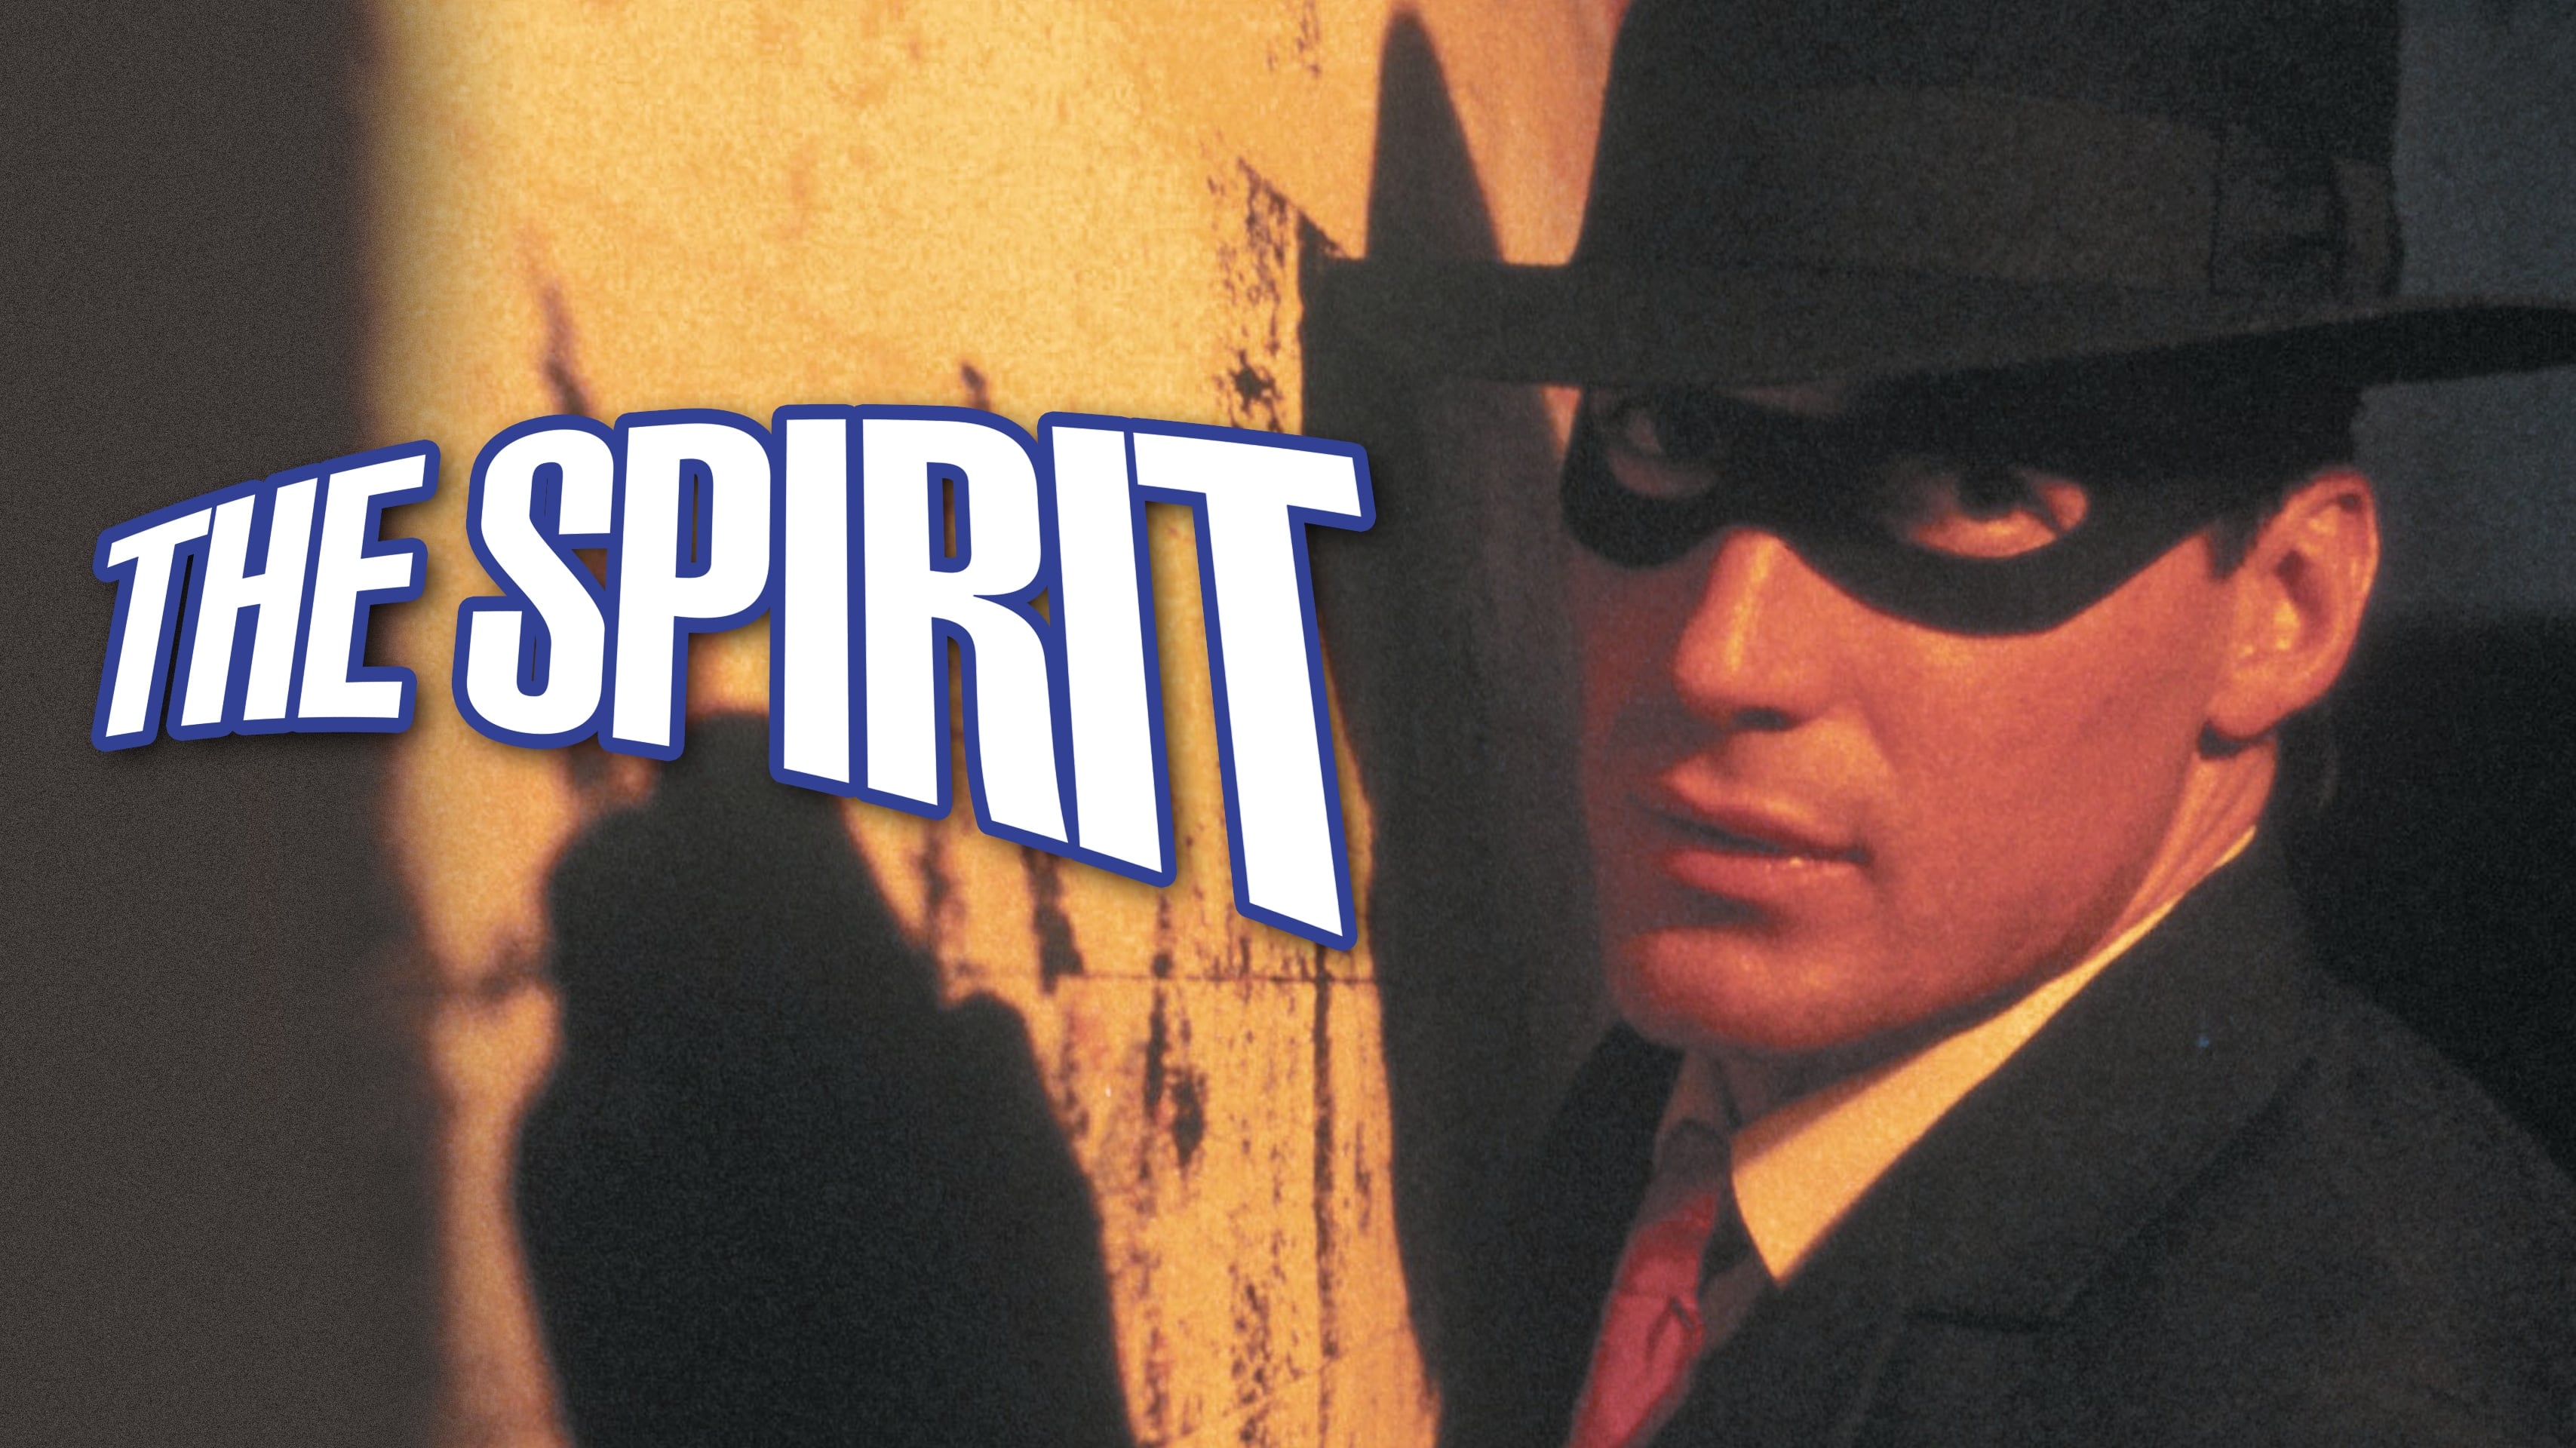 The Spirit (1987)